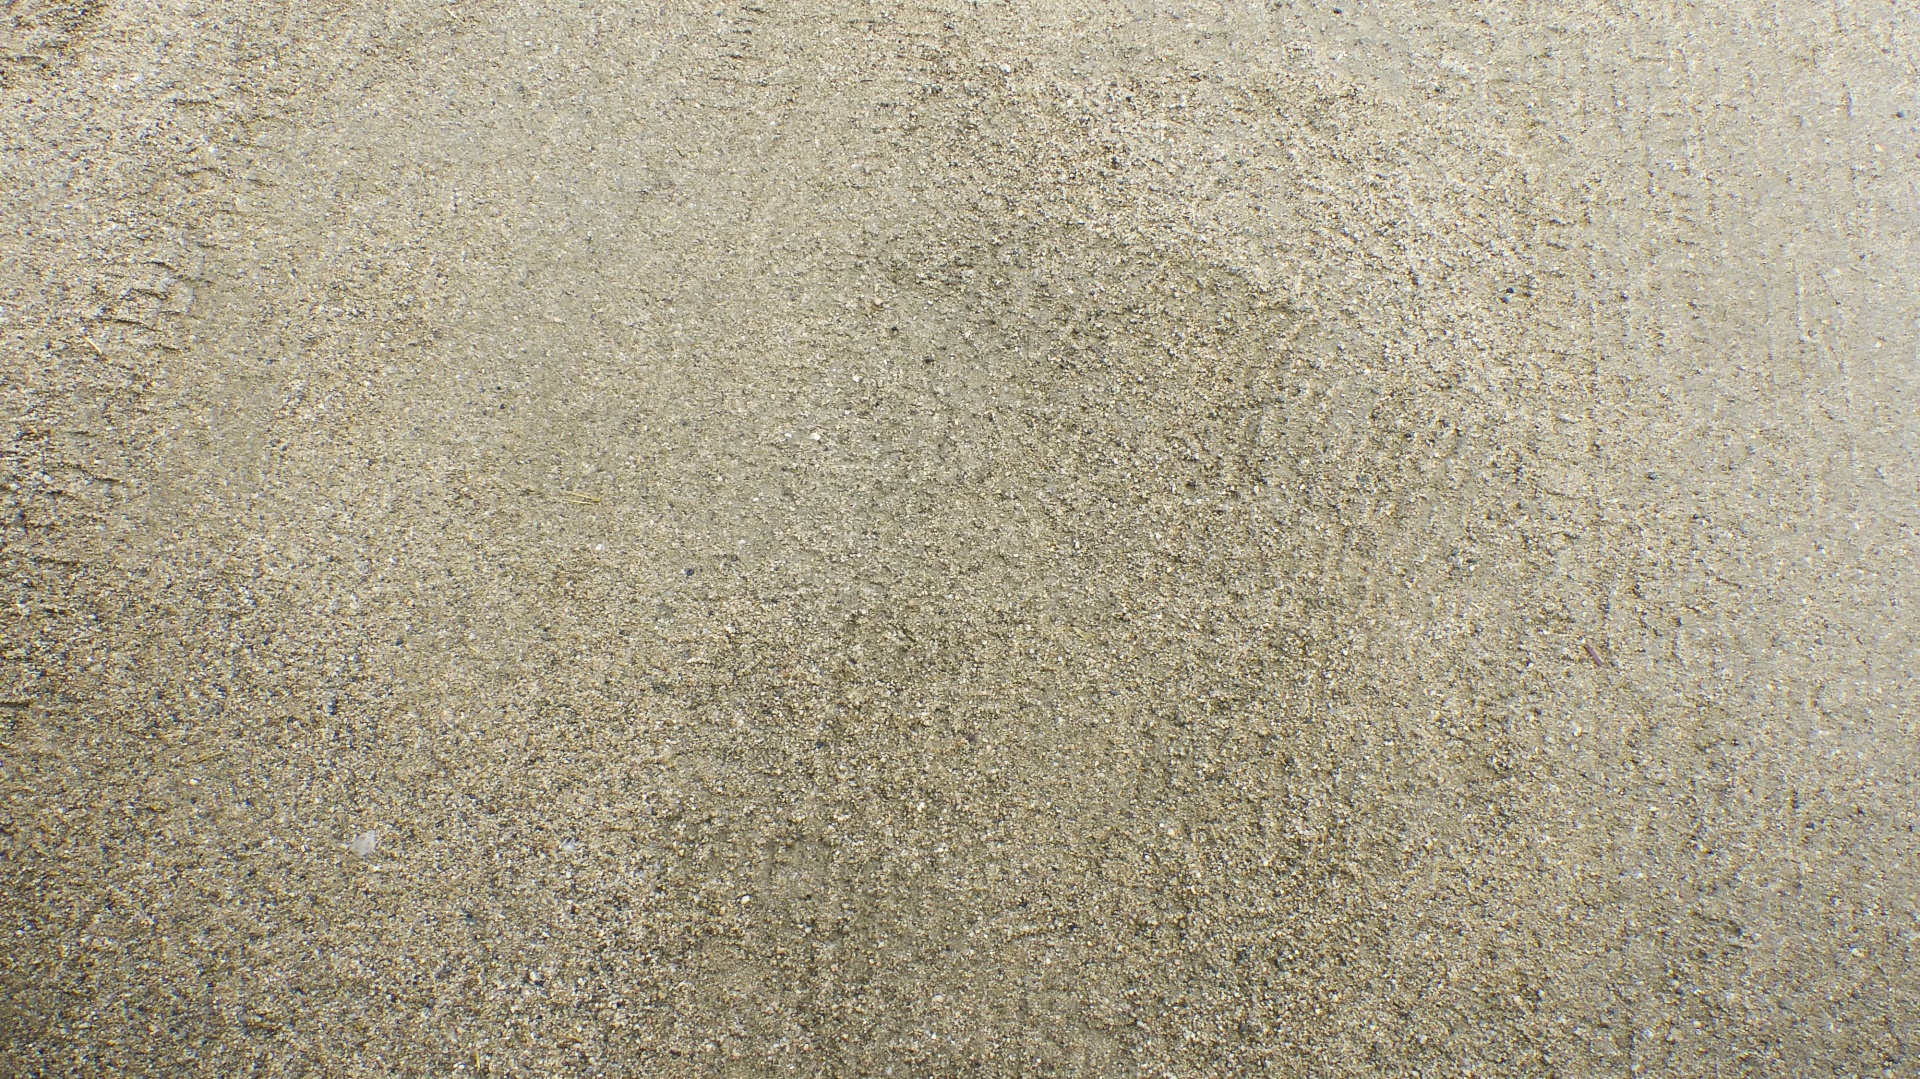 sand background texture free photo